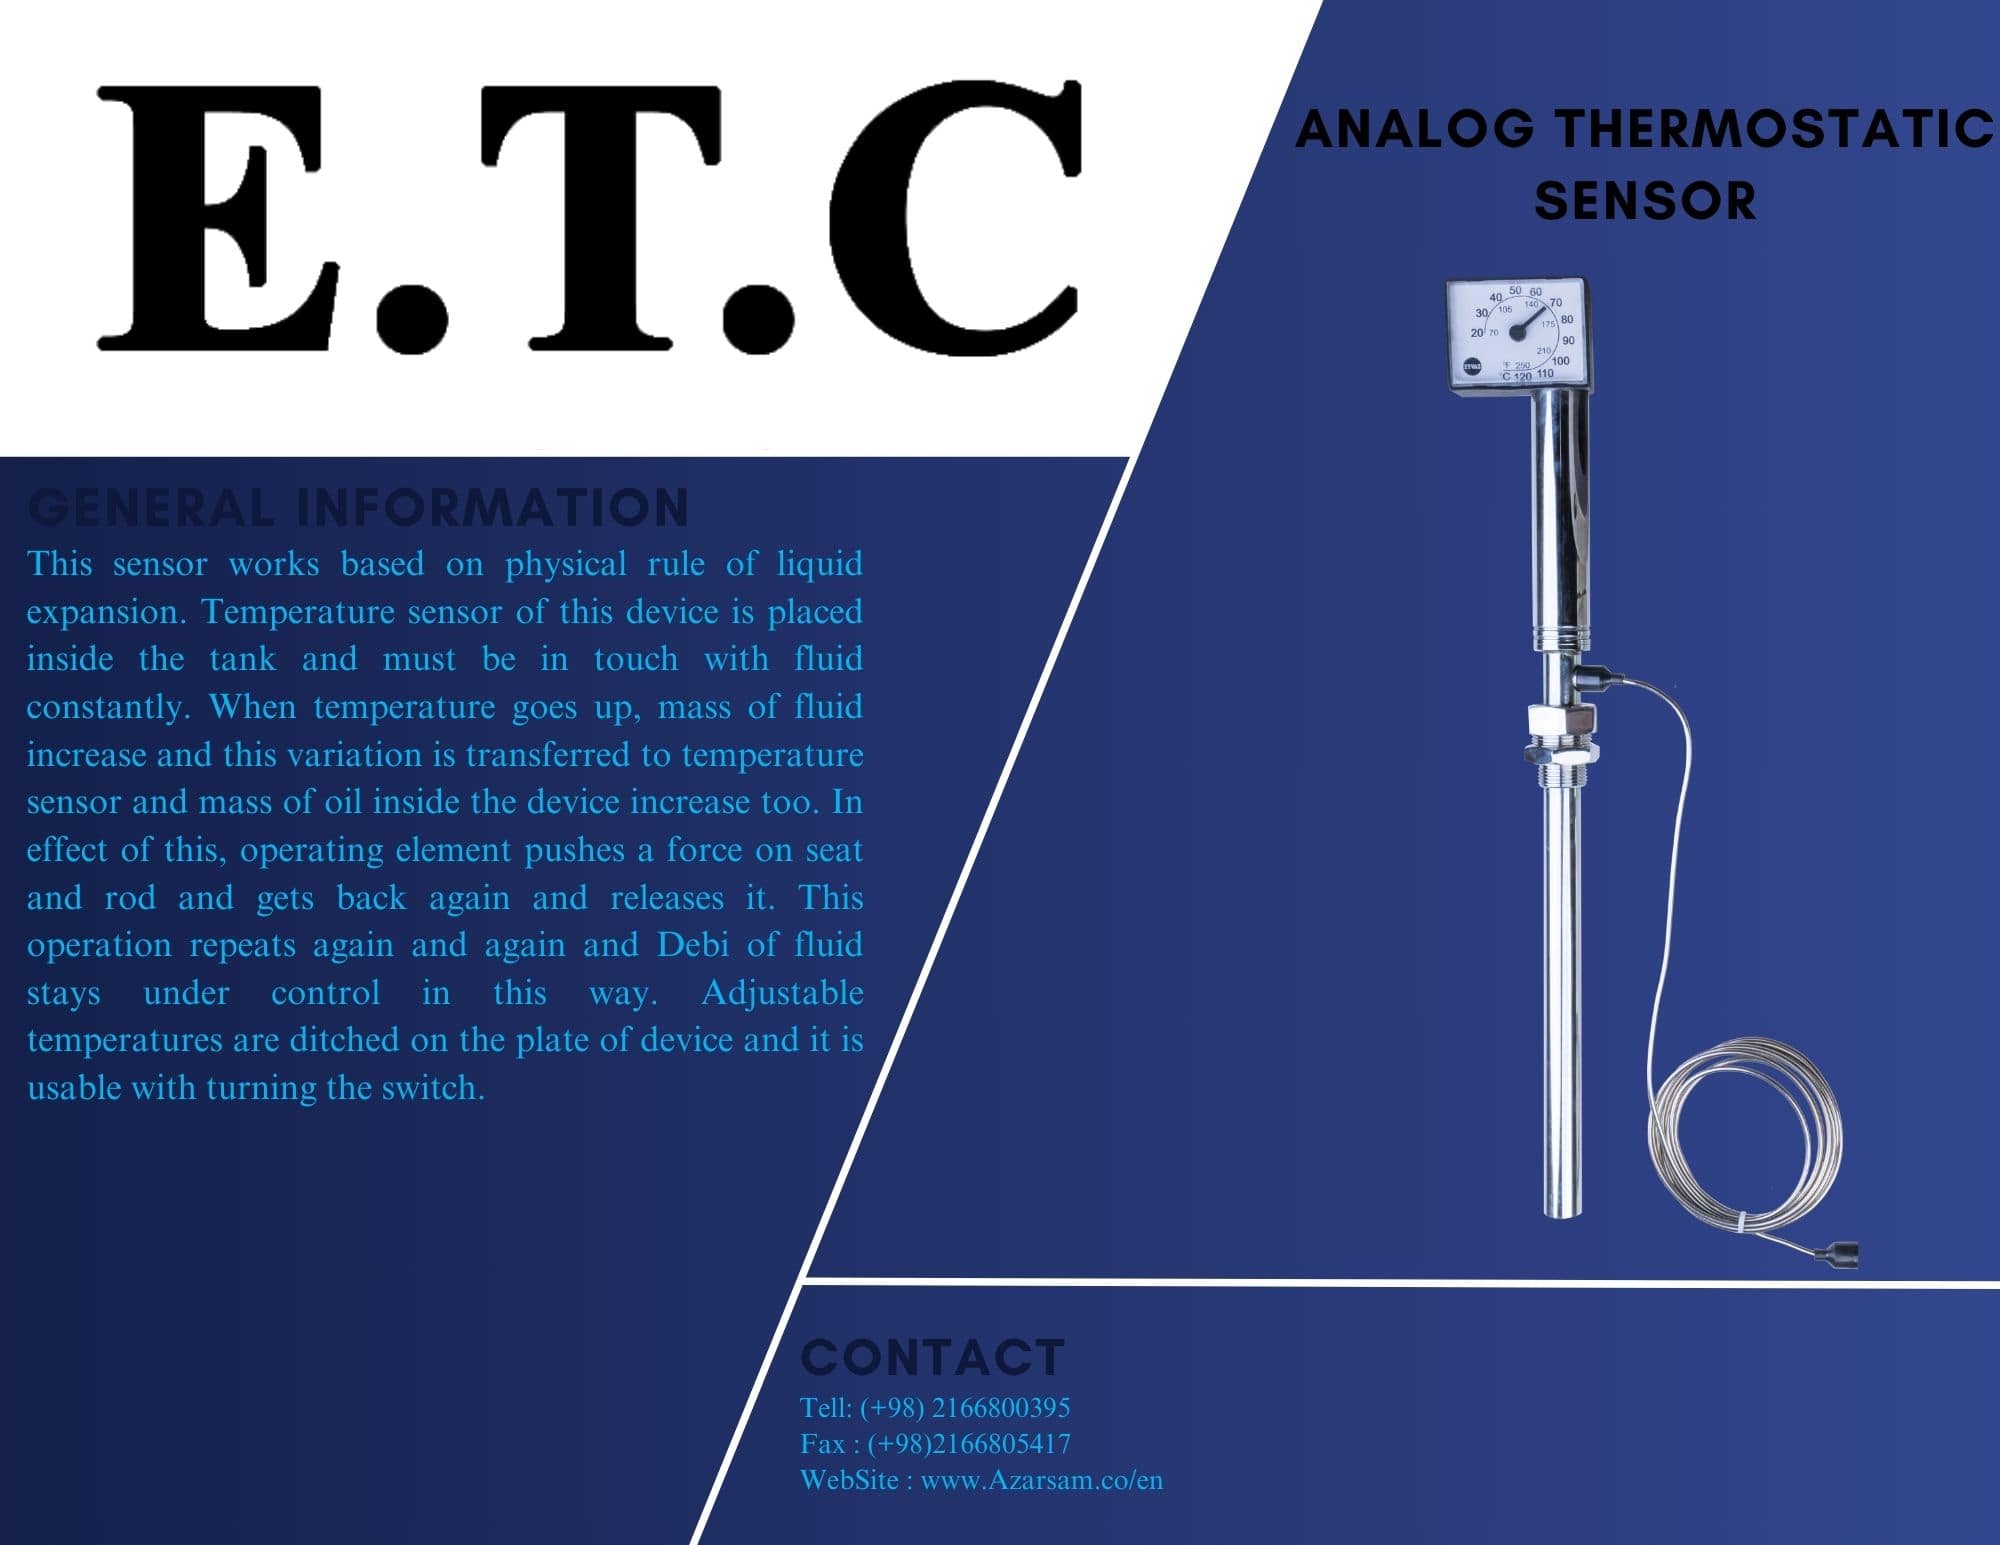  Analog Thermostatic Sensor